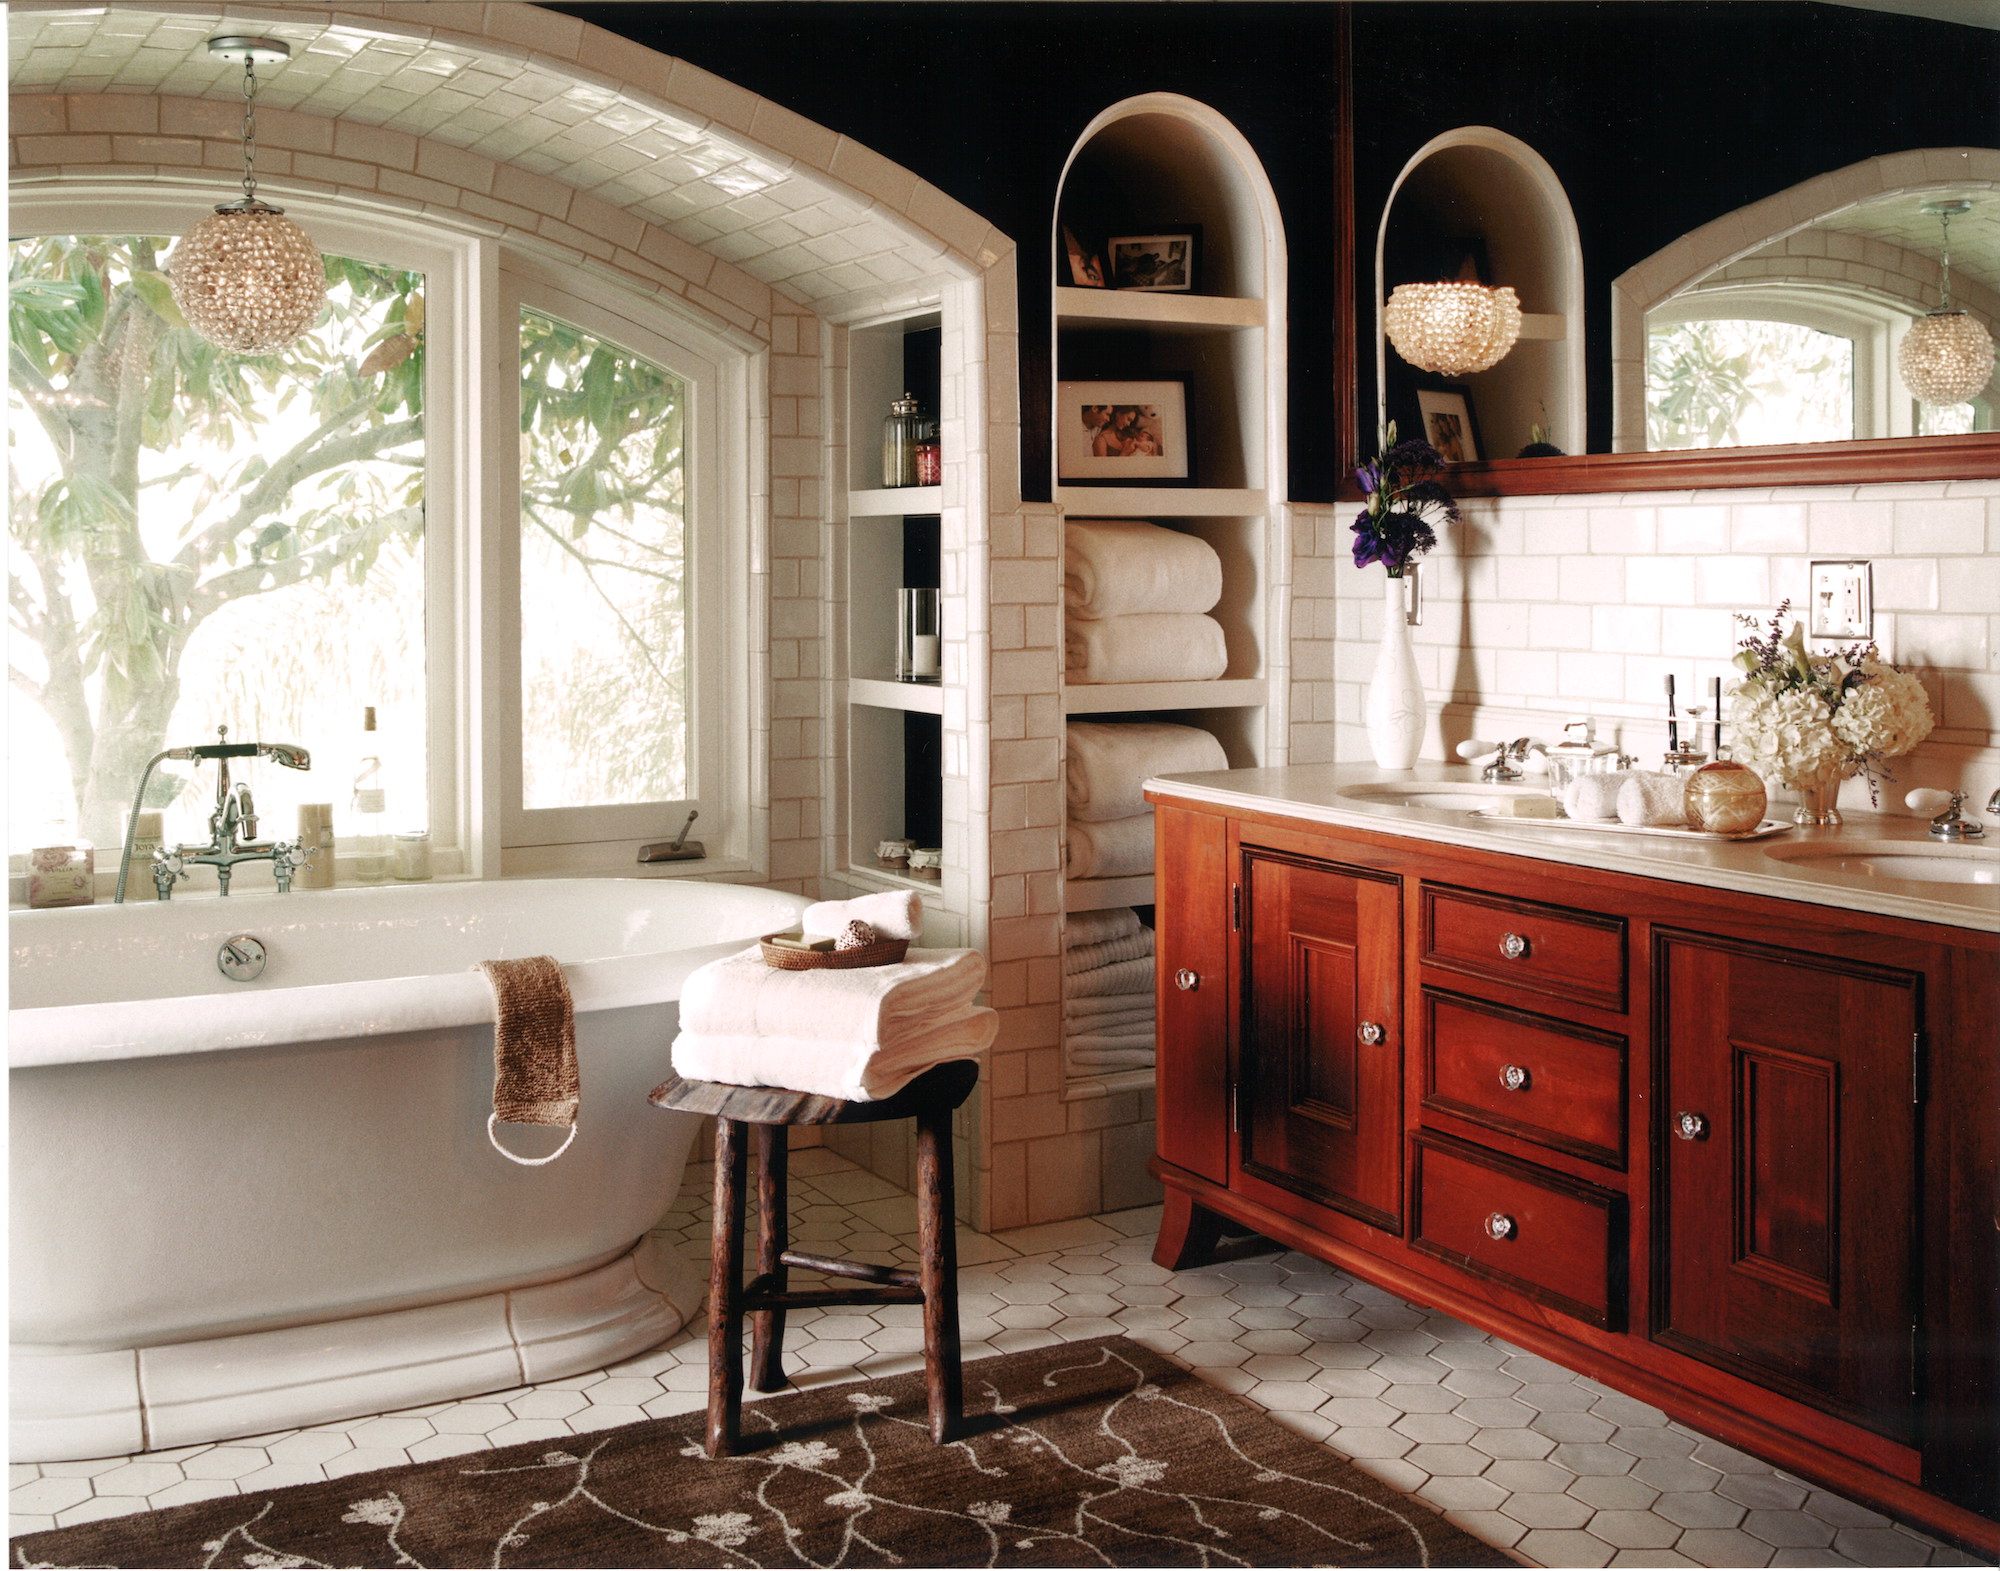 Bathroom of Jessica Alba's Hollywood Hills home, interior designed by Kari Whitman - Effect Magazine